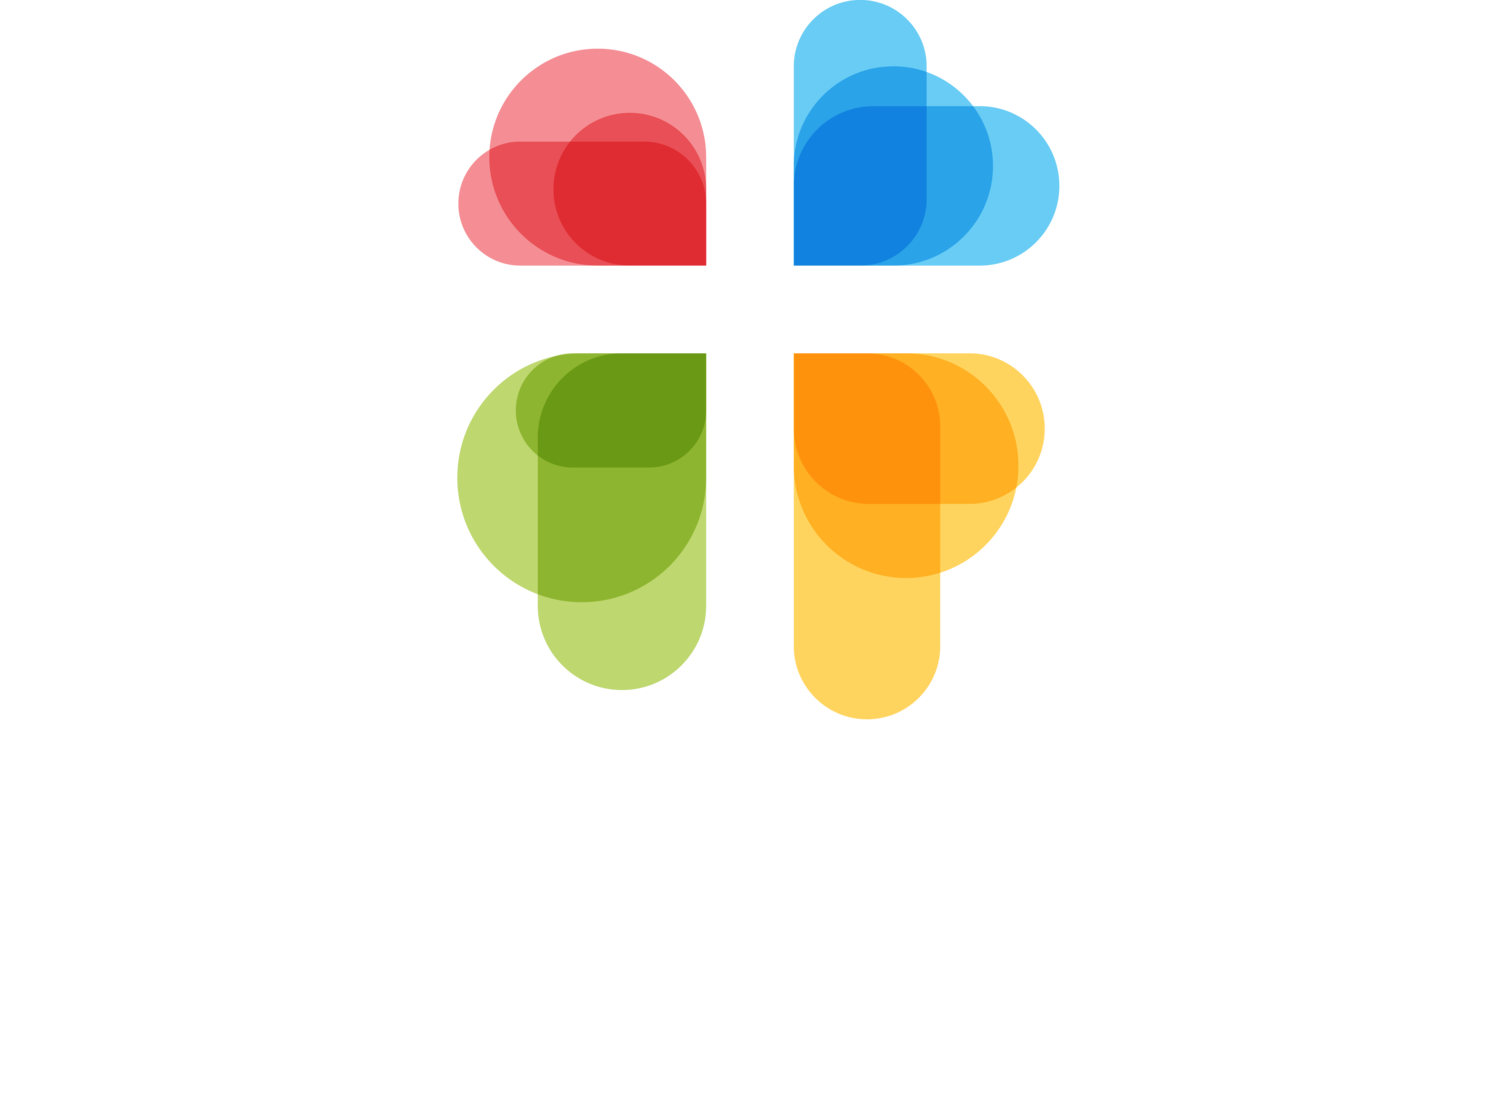 Church with Dreams